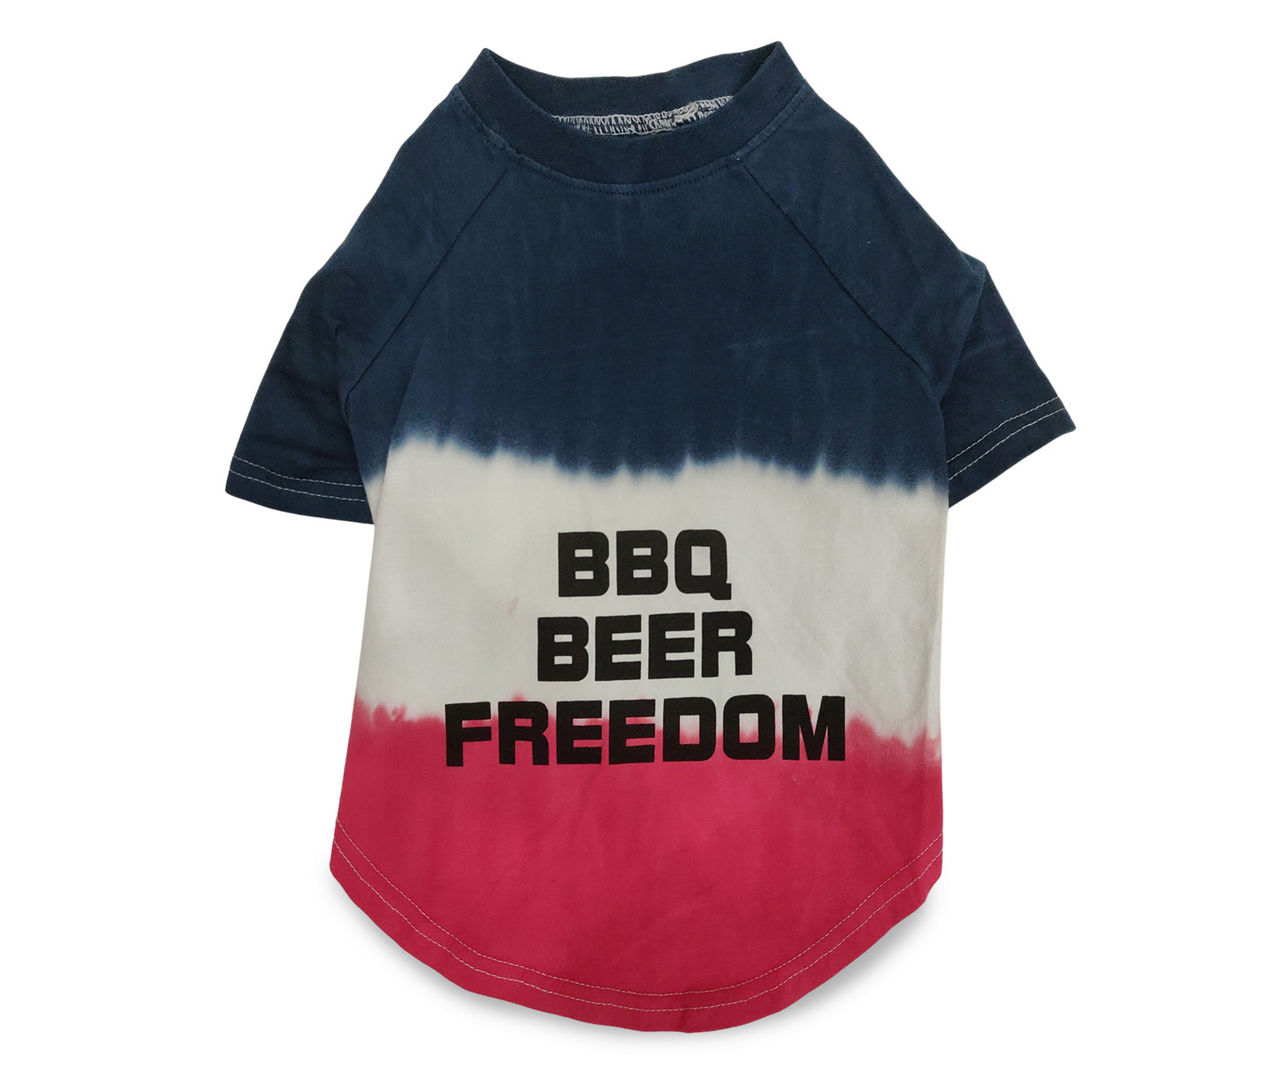 Dog's Medium "BBQ, Beer, Freedom" Patriotic T-Shirt